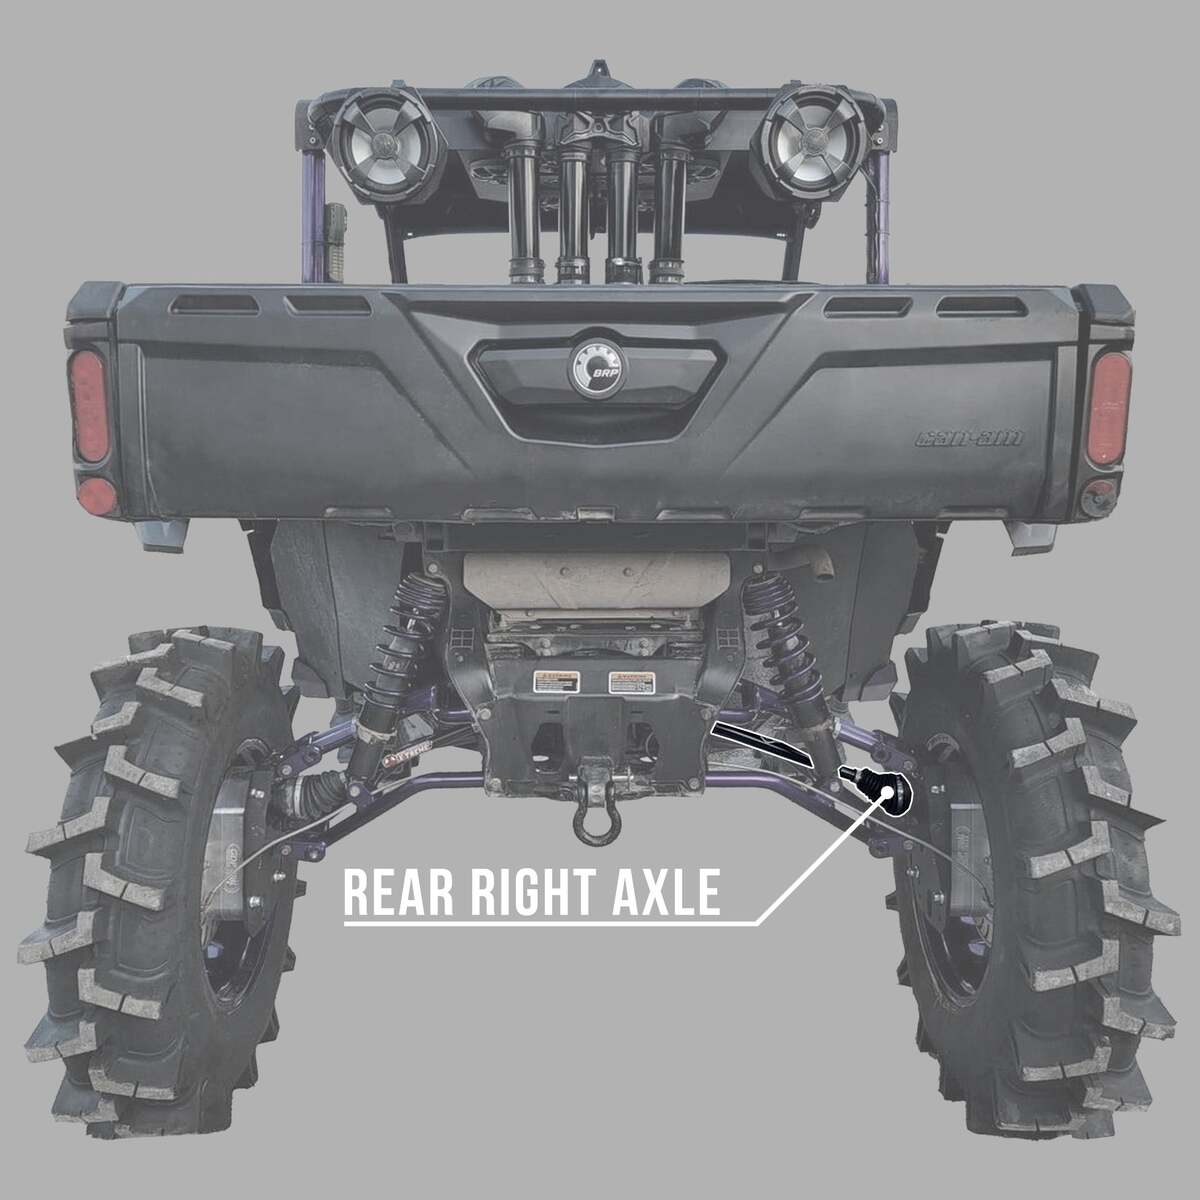 Demon Powersports Polaris RZR RS1 Demon Heavy Duty Lift Kit Axle